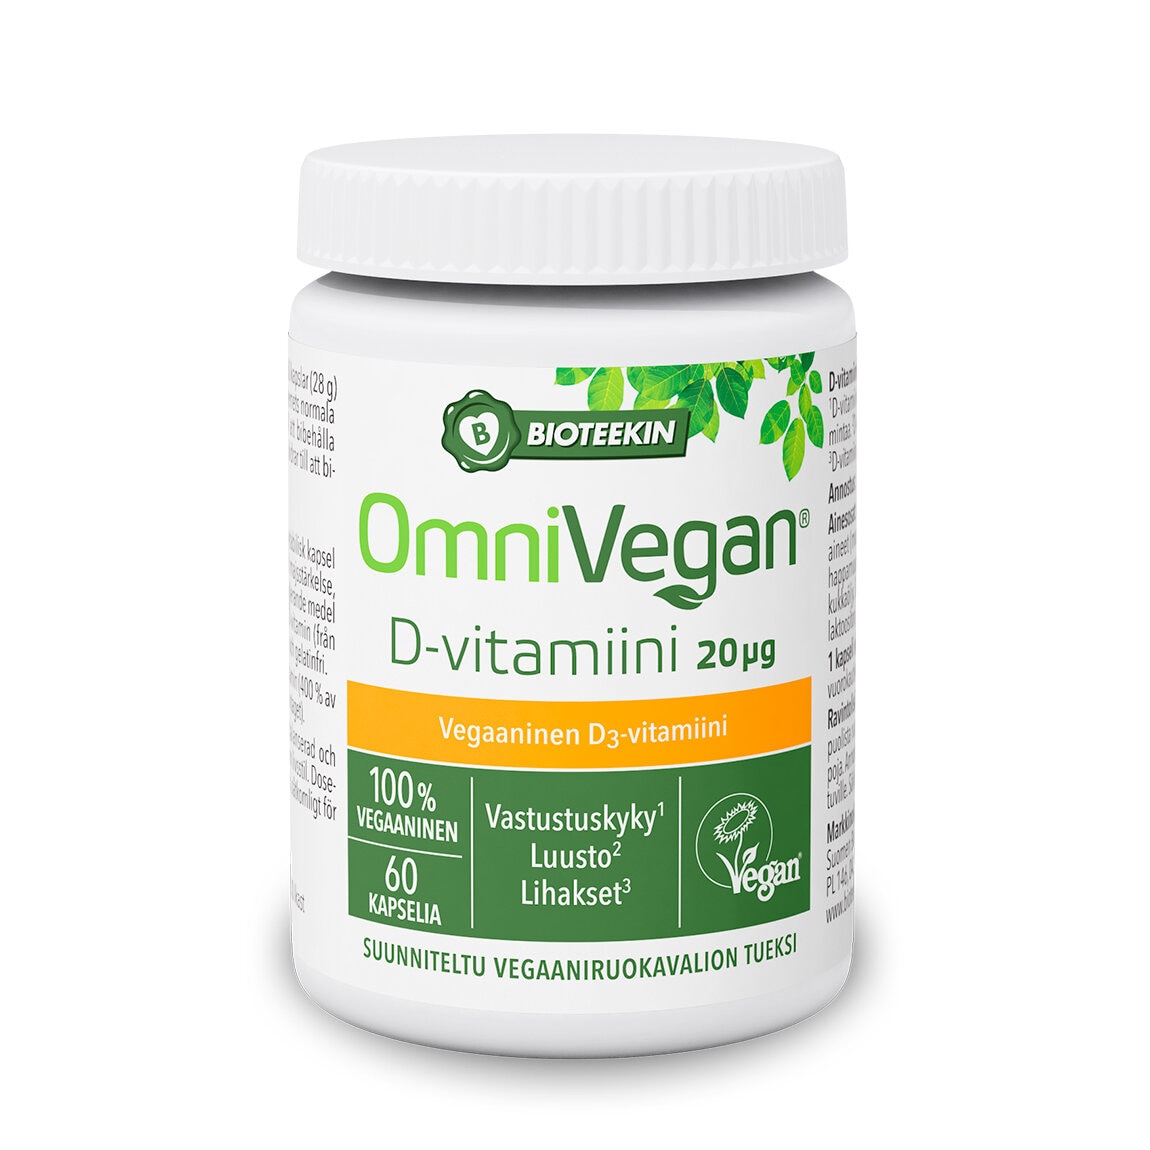 OmniVegan® D-vitamiini 20 μg PARASTA ENNEN 30.9.2022